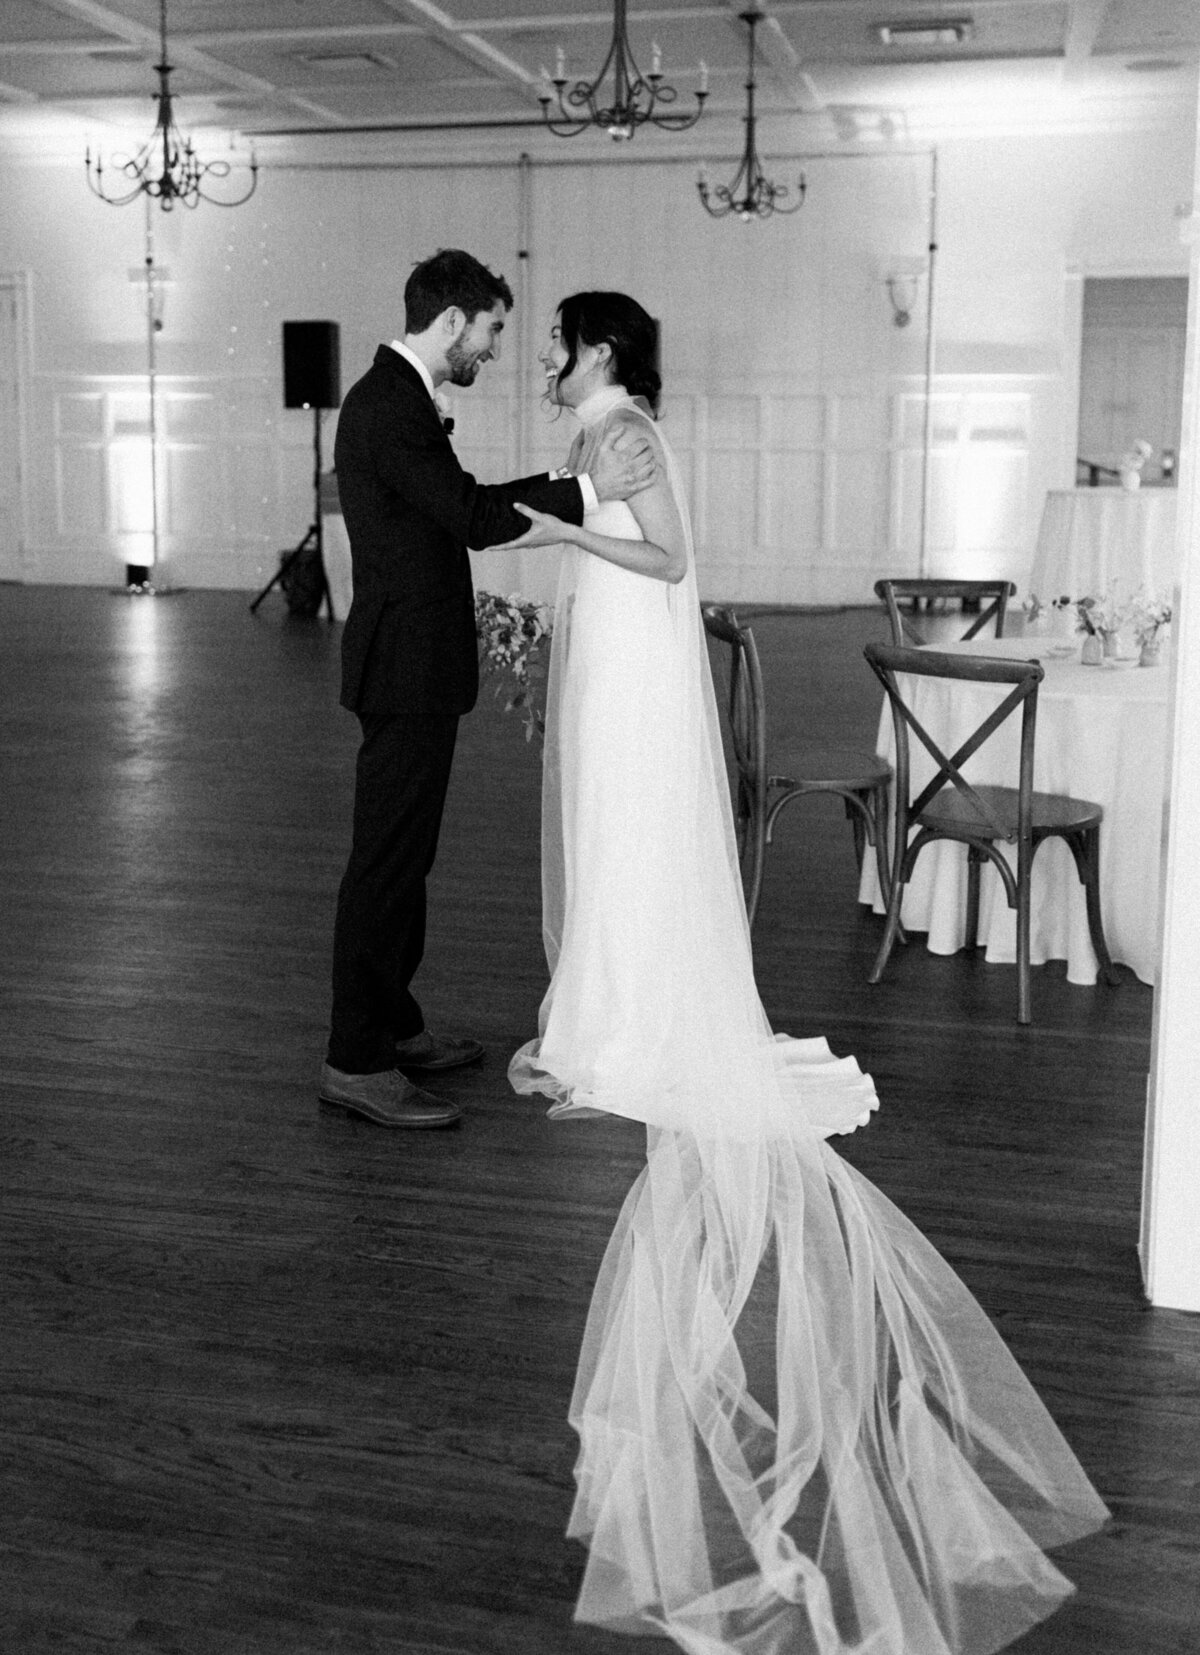 Bride and groom first dance at Mattie's wedding venue in Austin